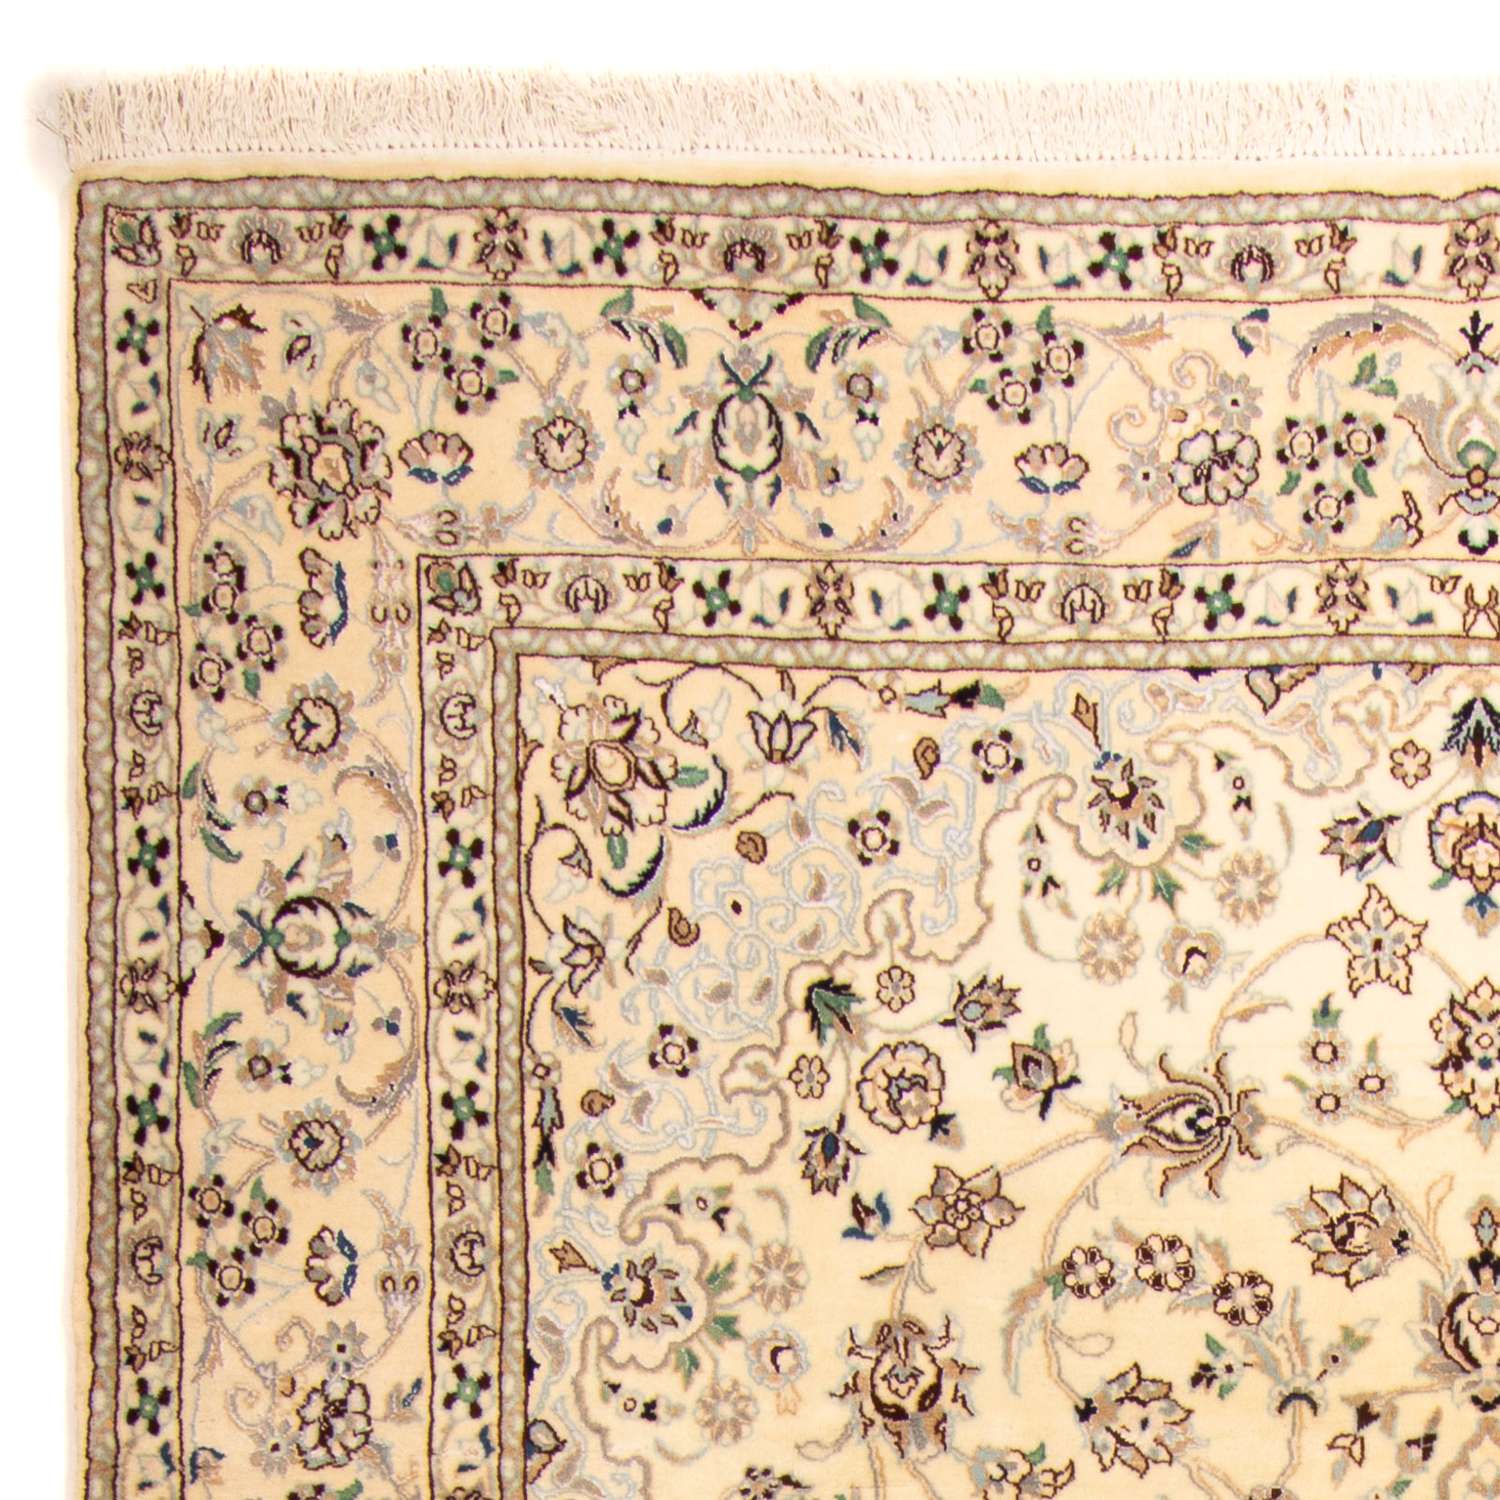 Tapis persan - Nain - Royal - 323 x 212 cm - beige